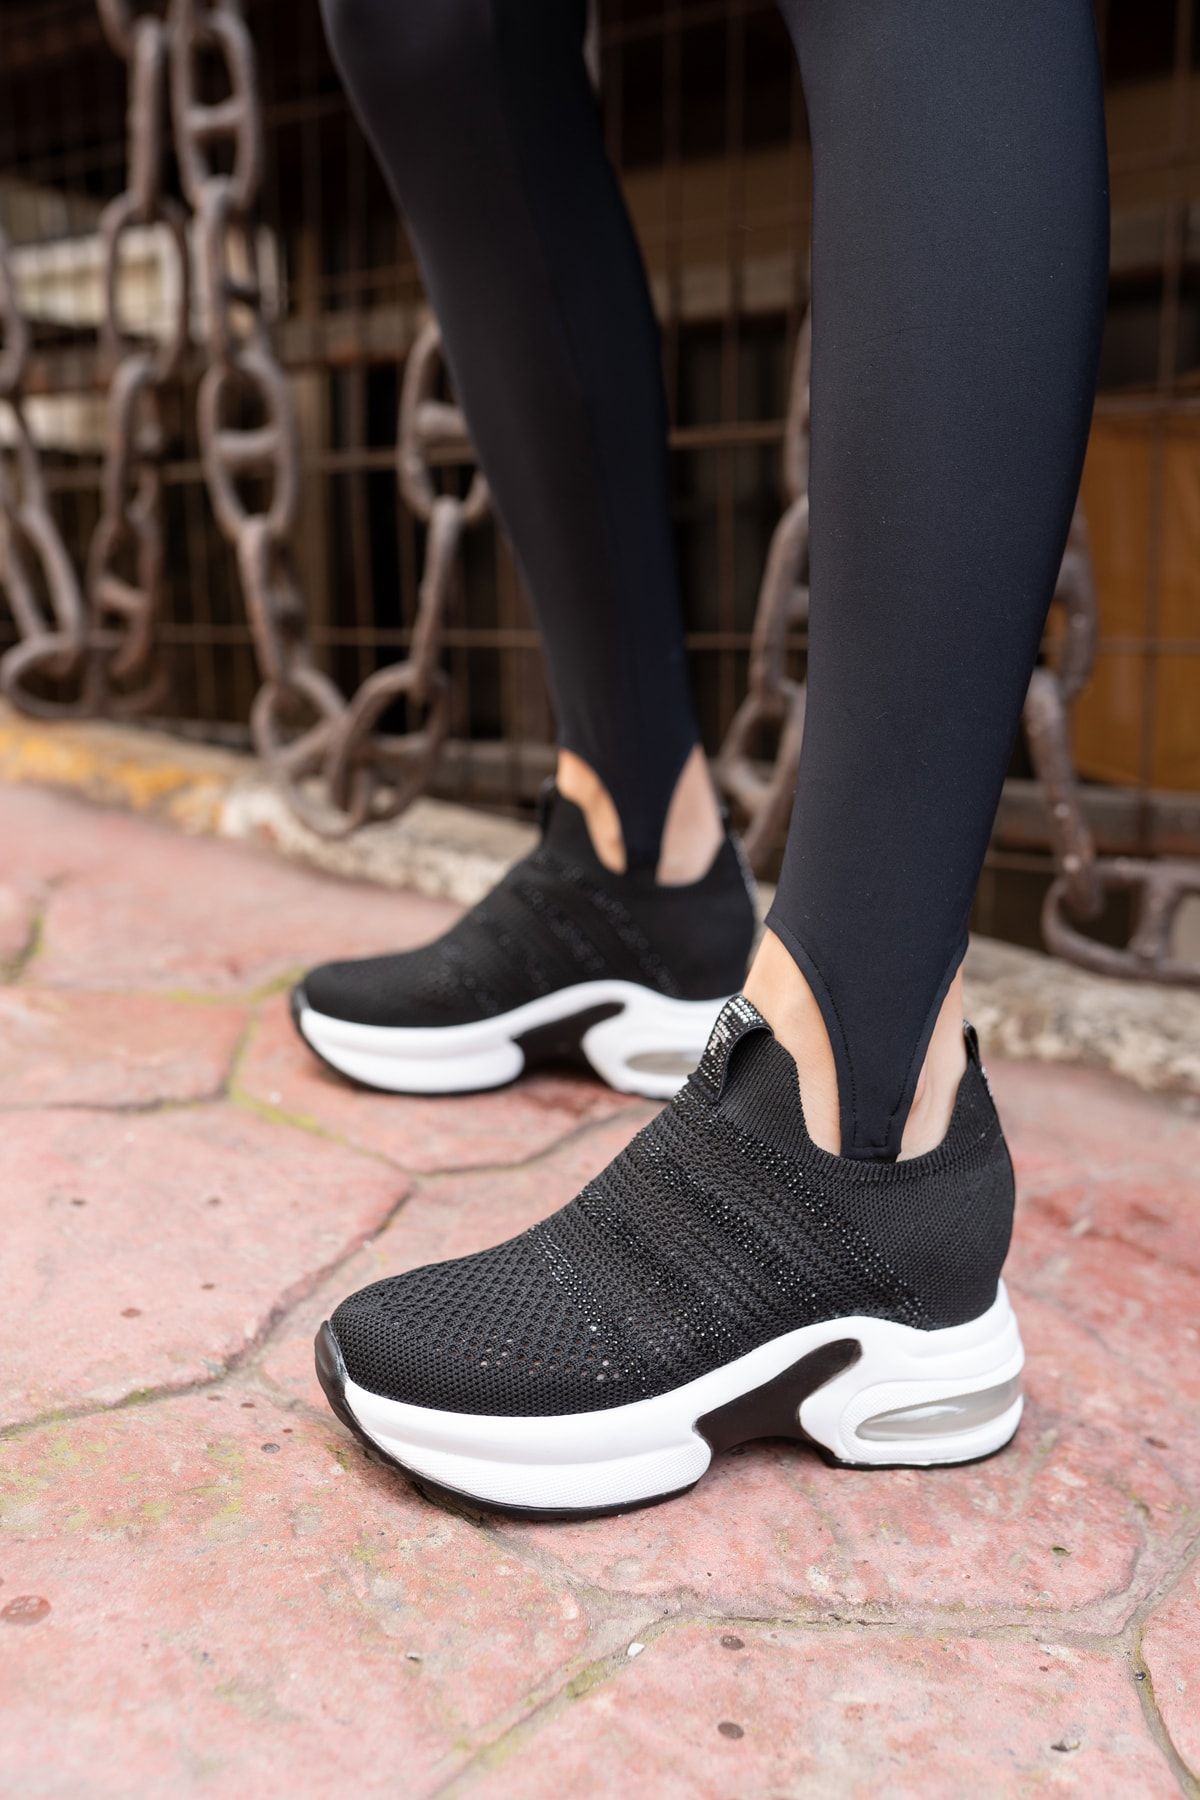 ANGELİNA JONES Sabina Kadın Siyah Taş Detay Gızlı Topuk Sneakers